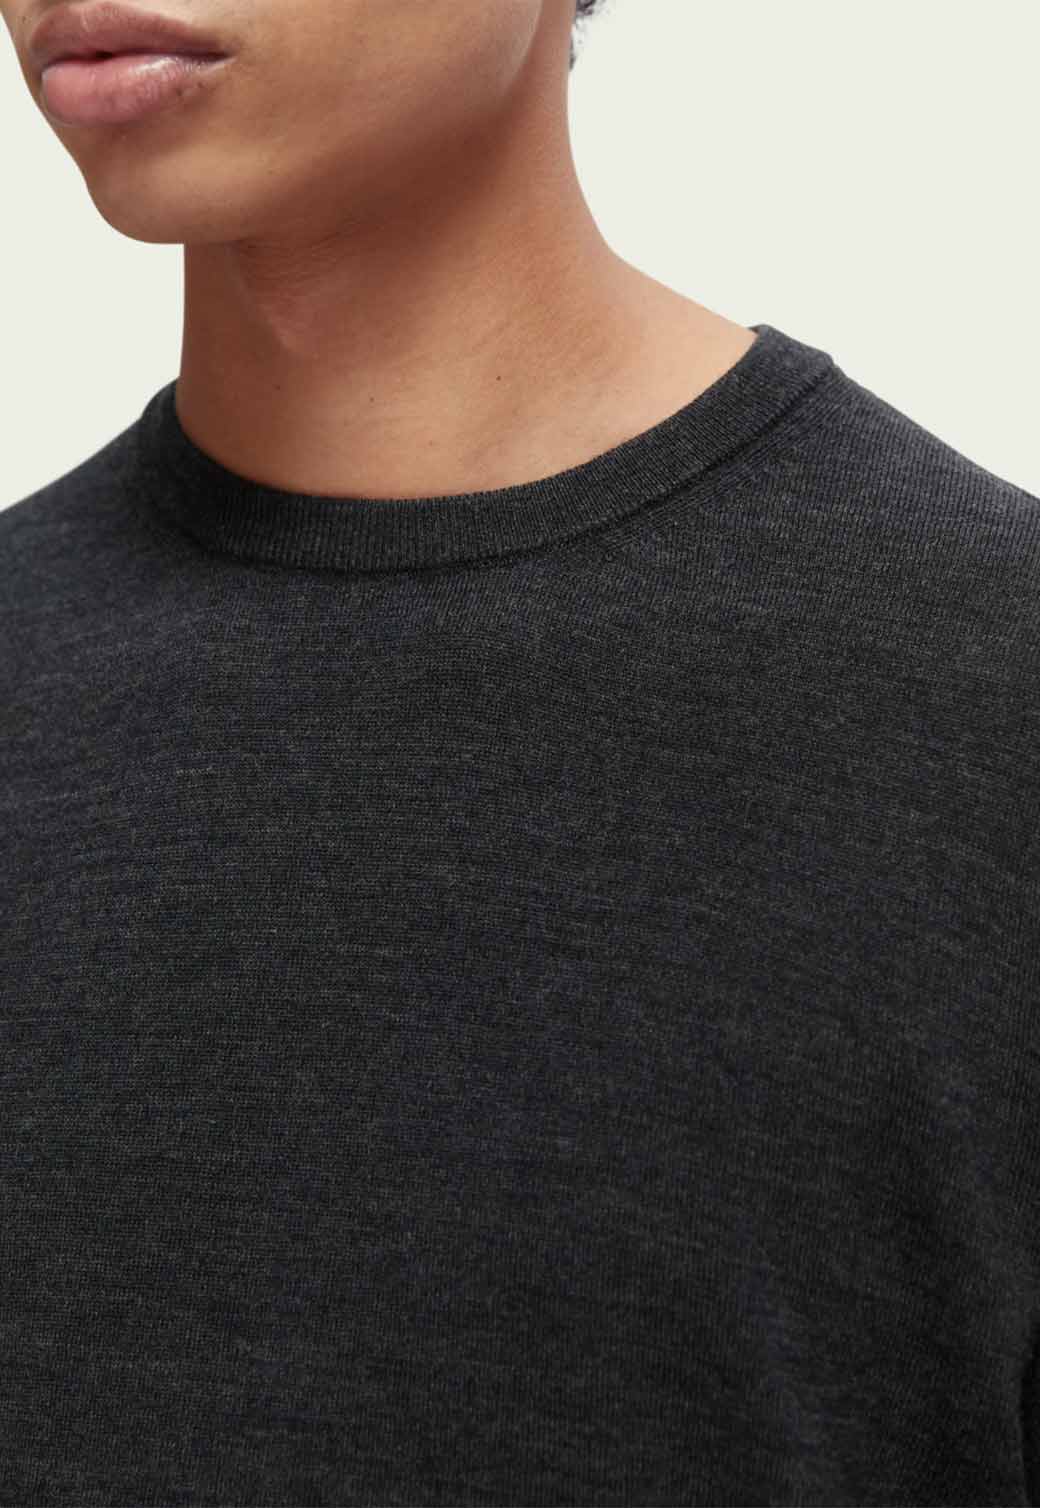 Gray סוודר במפתח עגול לגברים SCOTCH & SODA